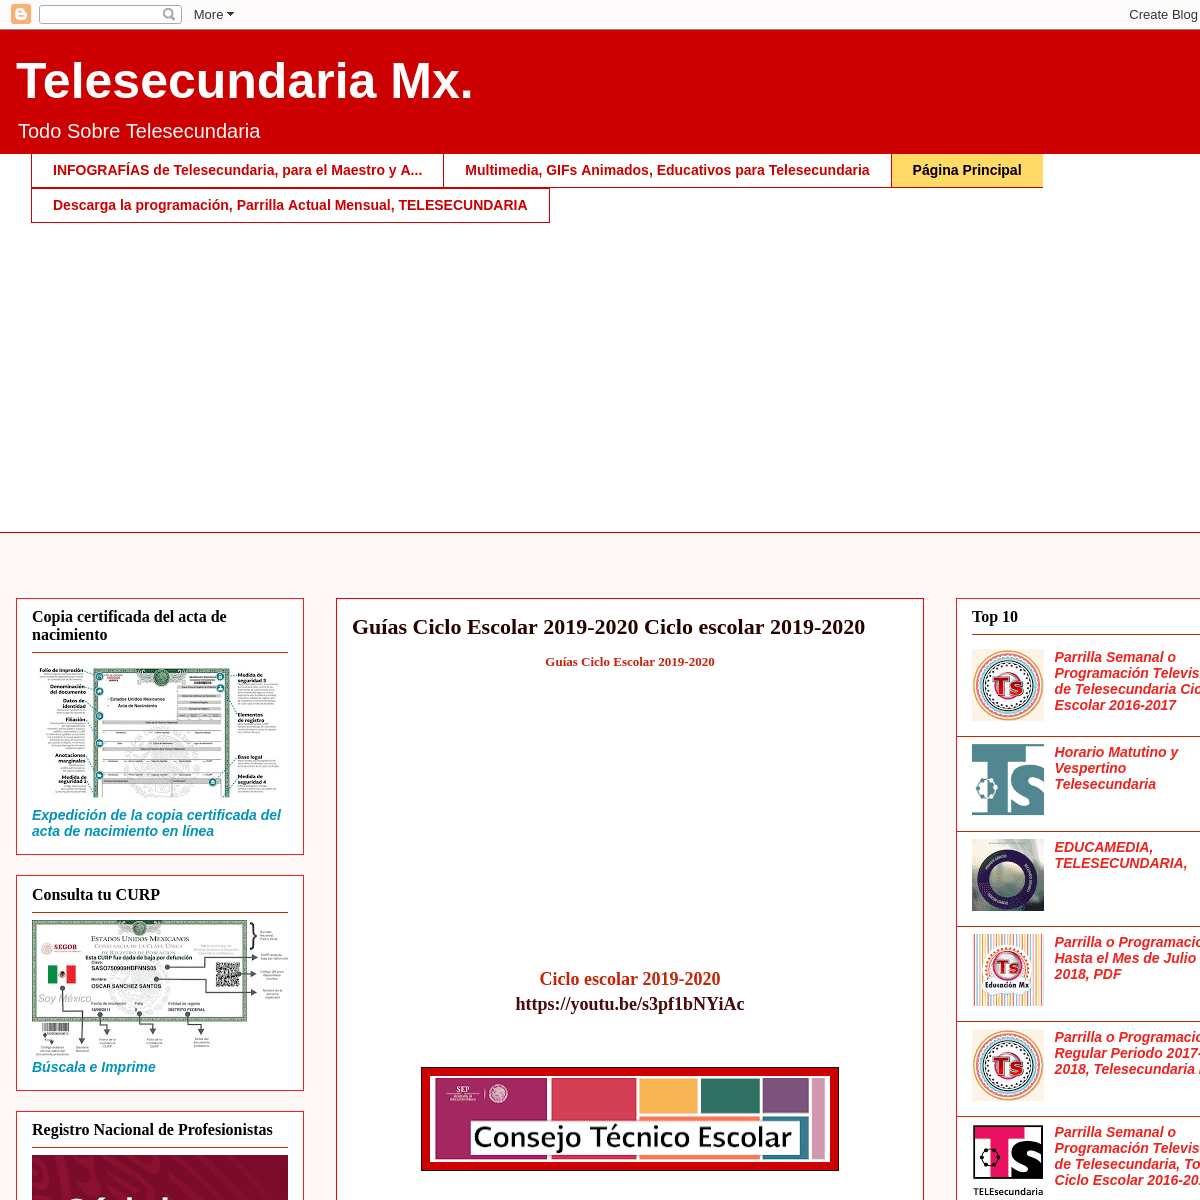 A complete backup of telesecundariamx.blogspot.com